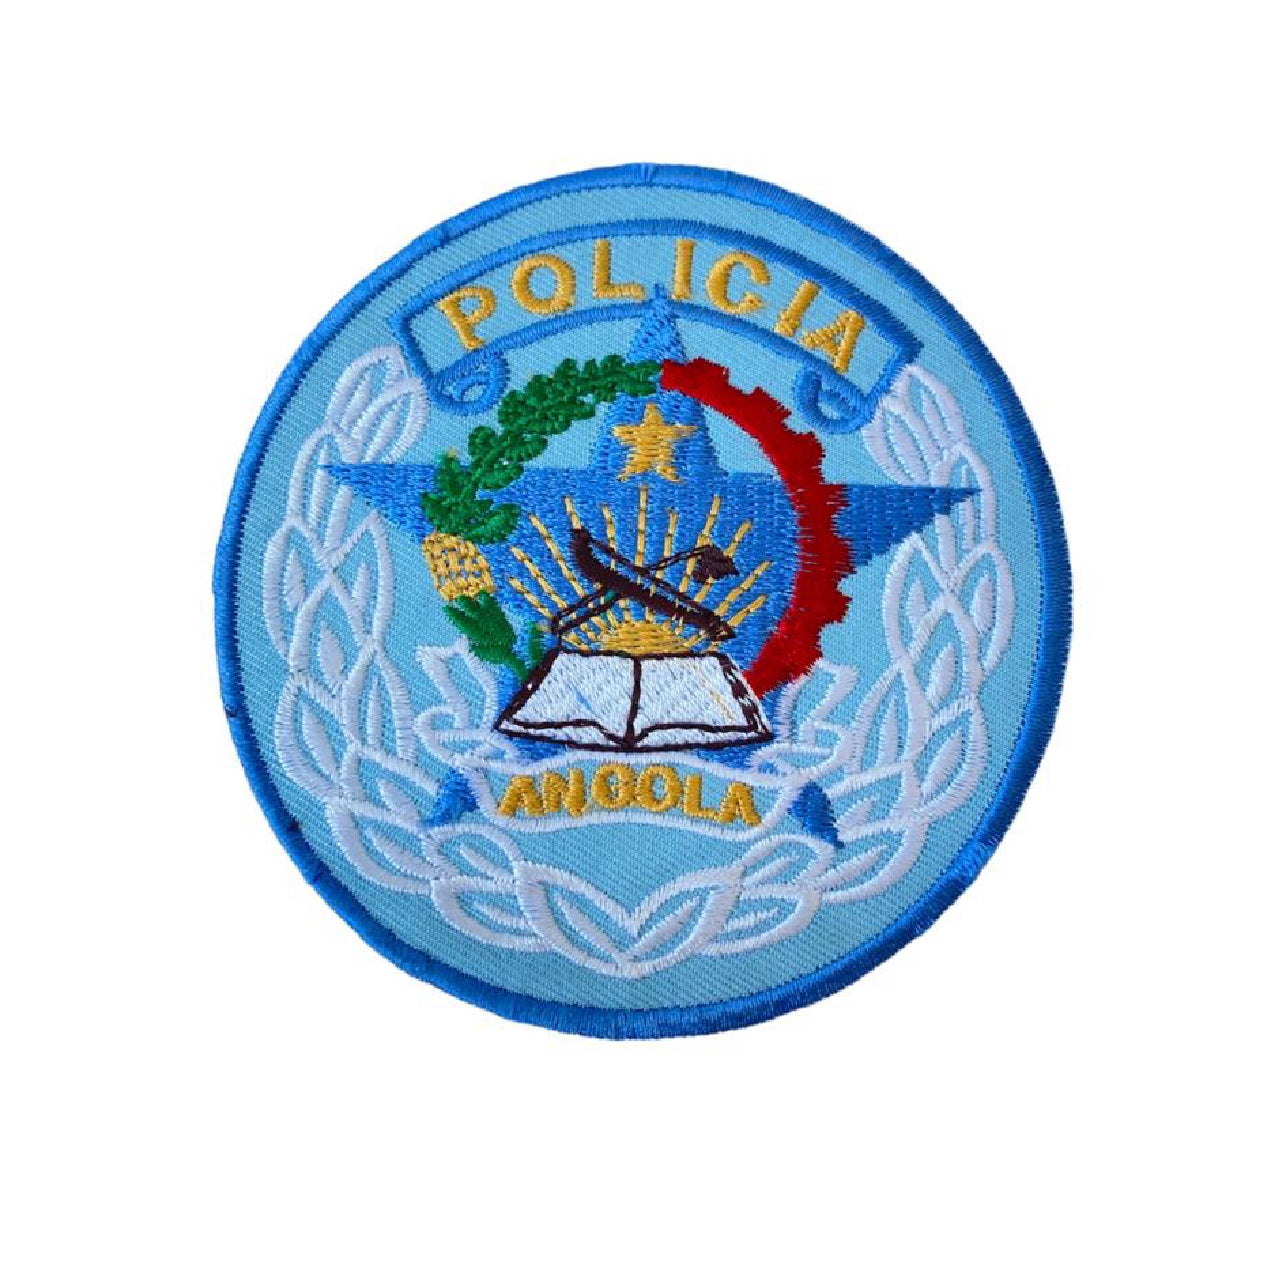 Patch Emblema Policia de Angola